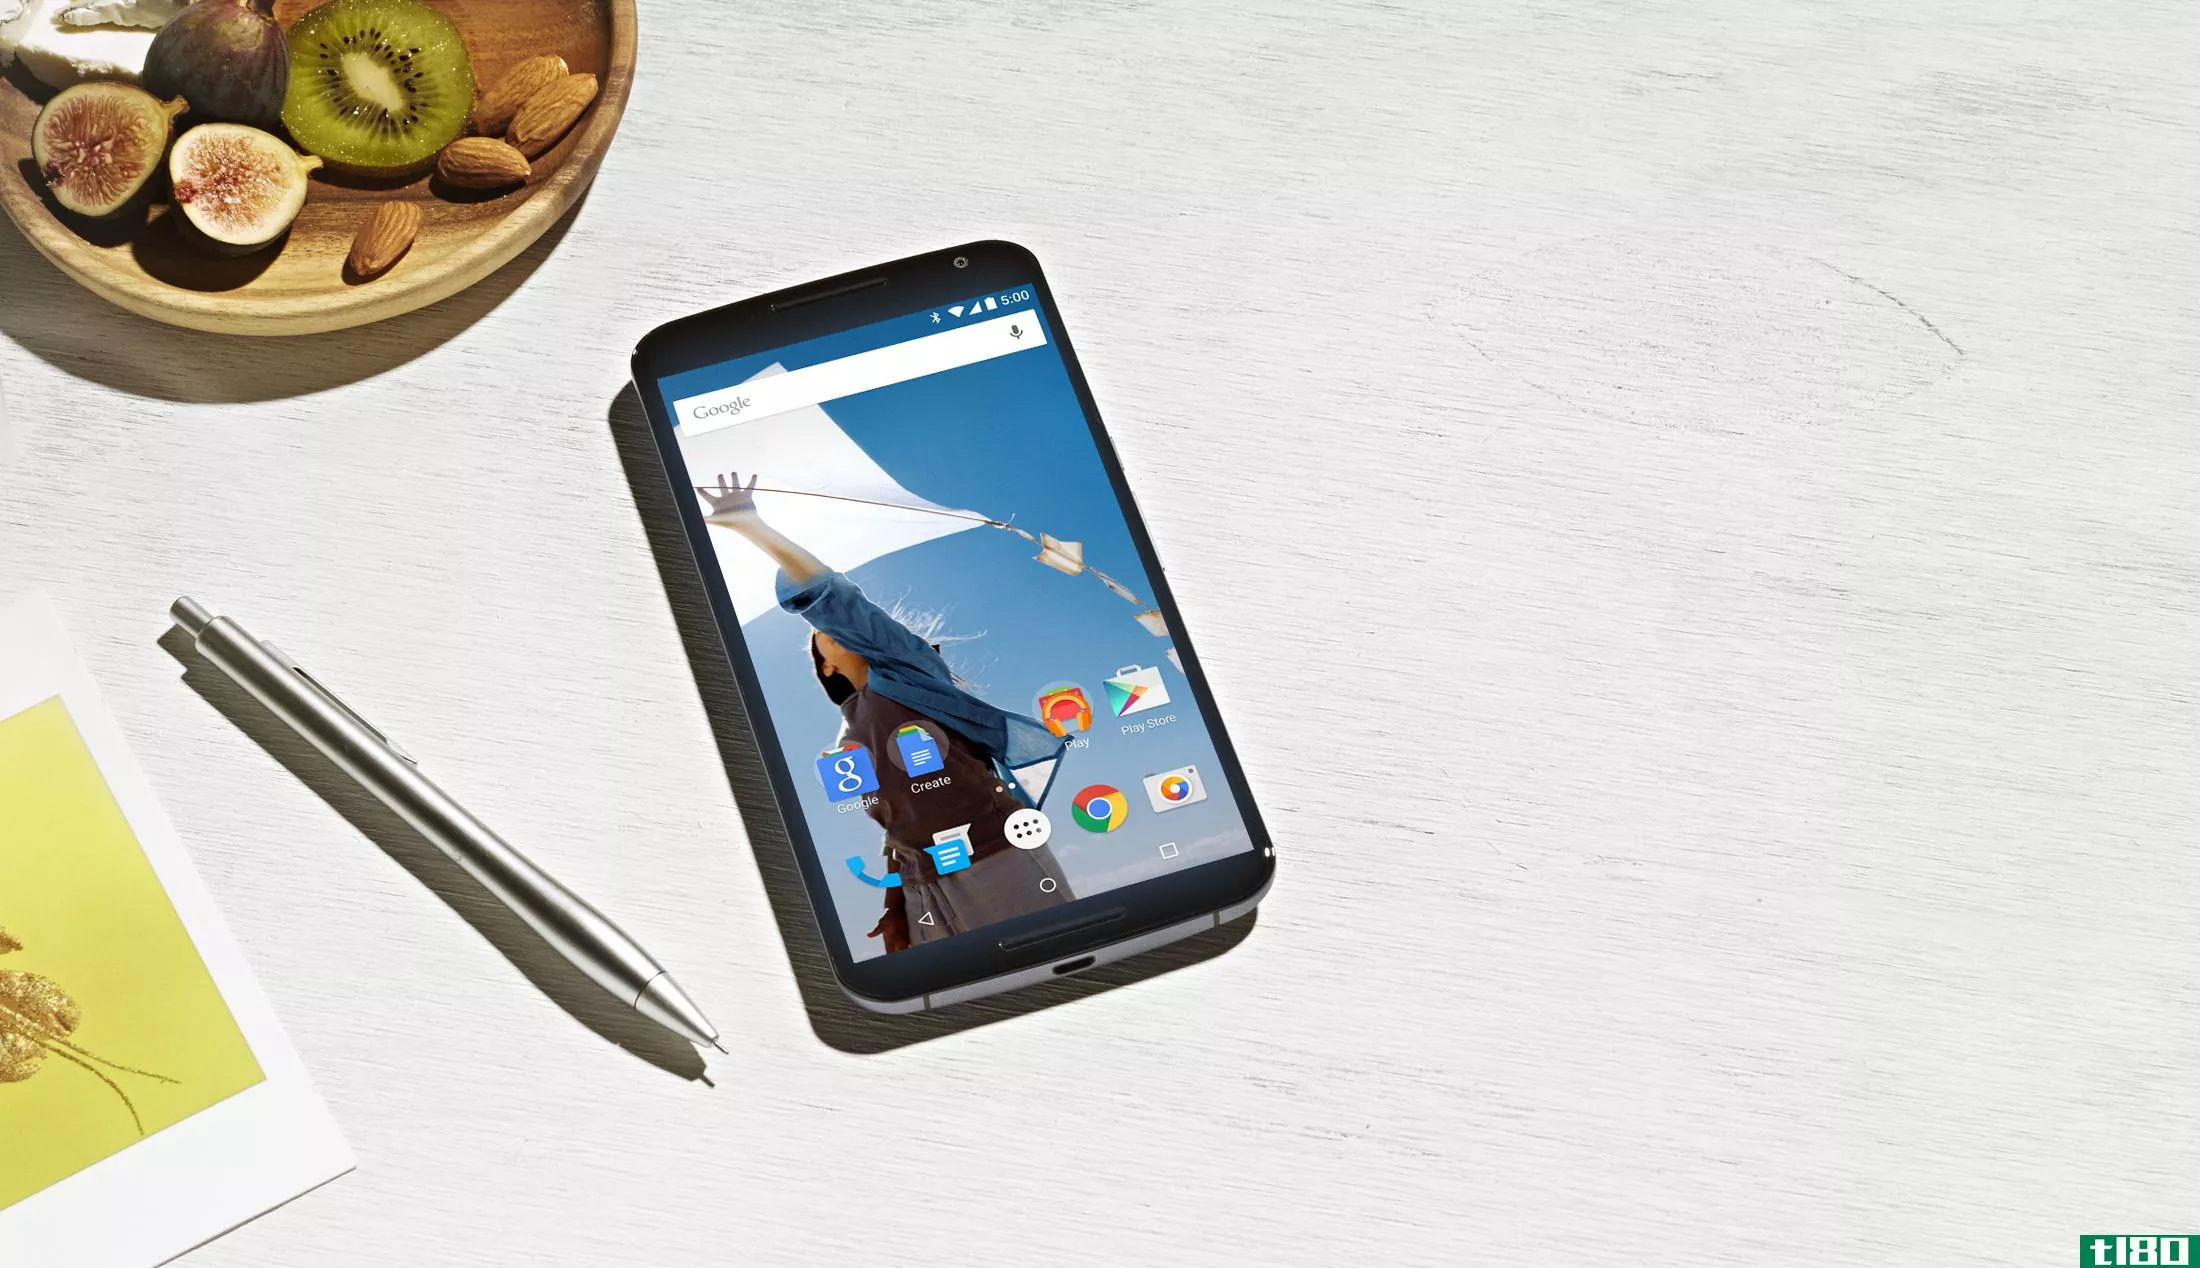 android棒棒糖有一个“杀死开关”，可以让被盗的手机变得毫无用处